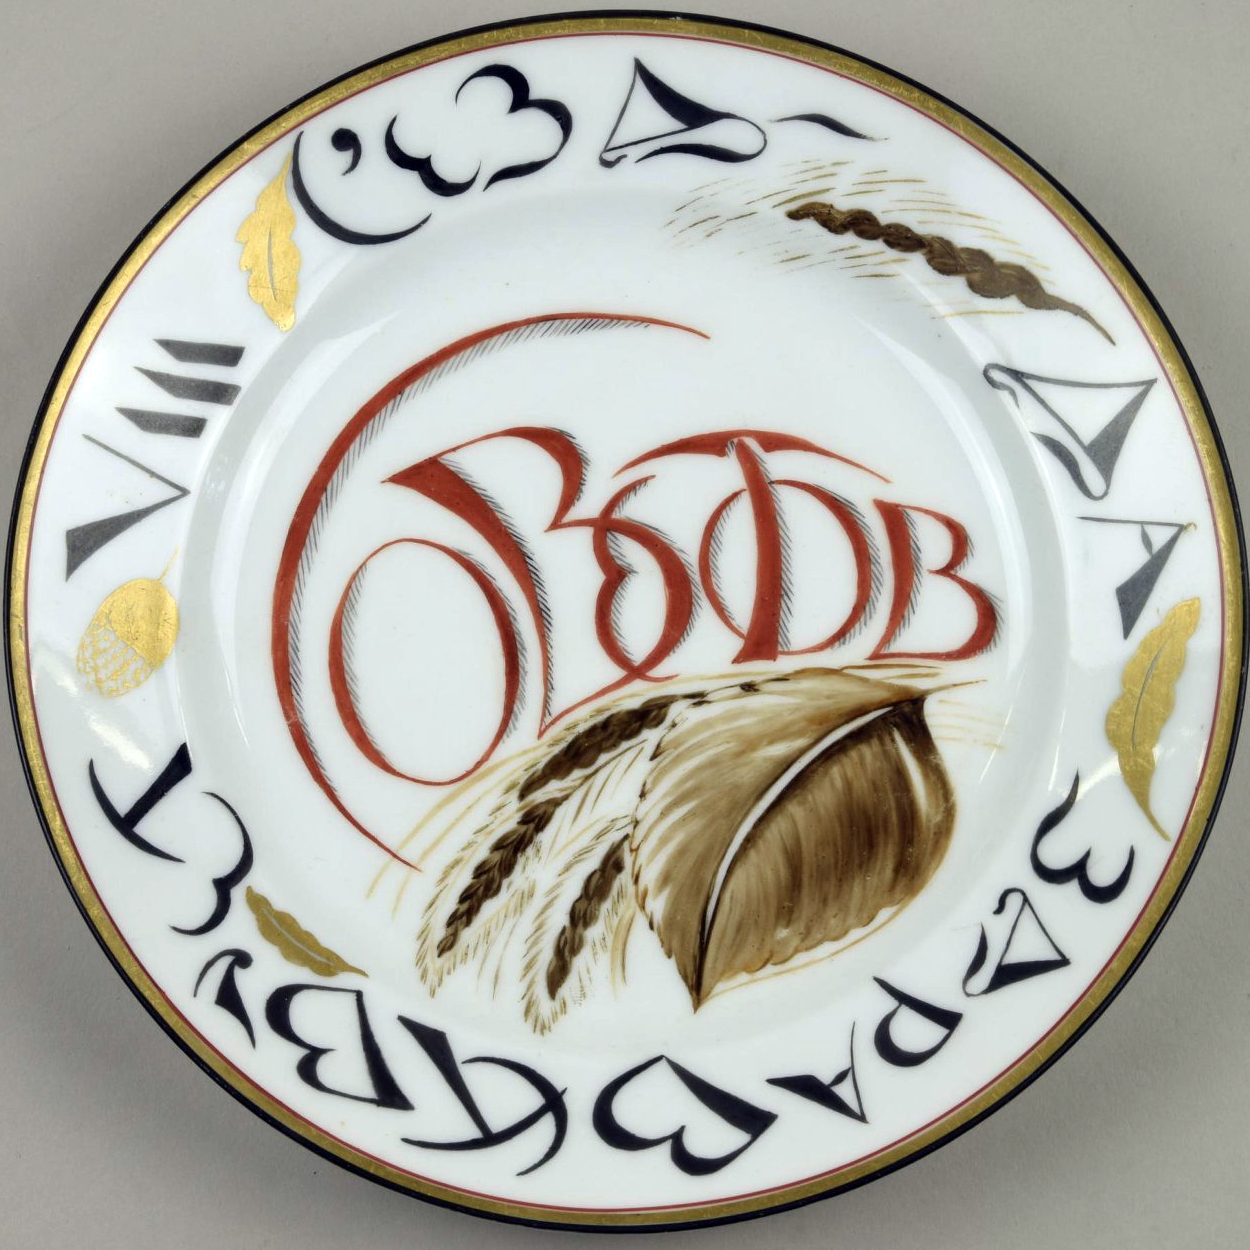 Soviet Propaganda Porcelain Plate "VIII Congress" by Kobyletskaya